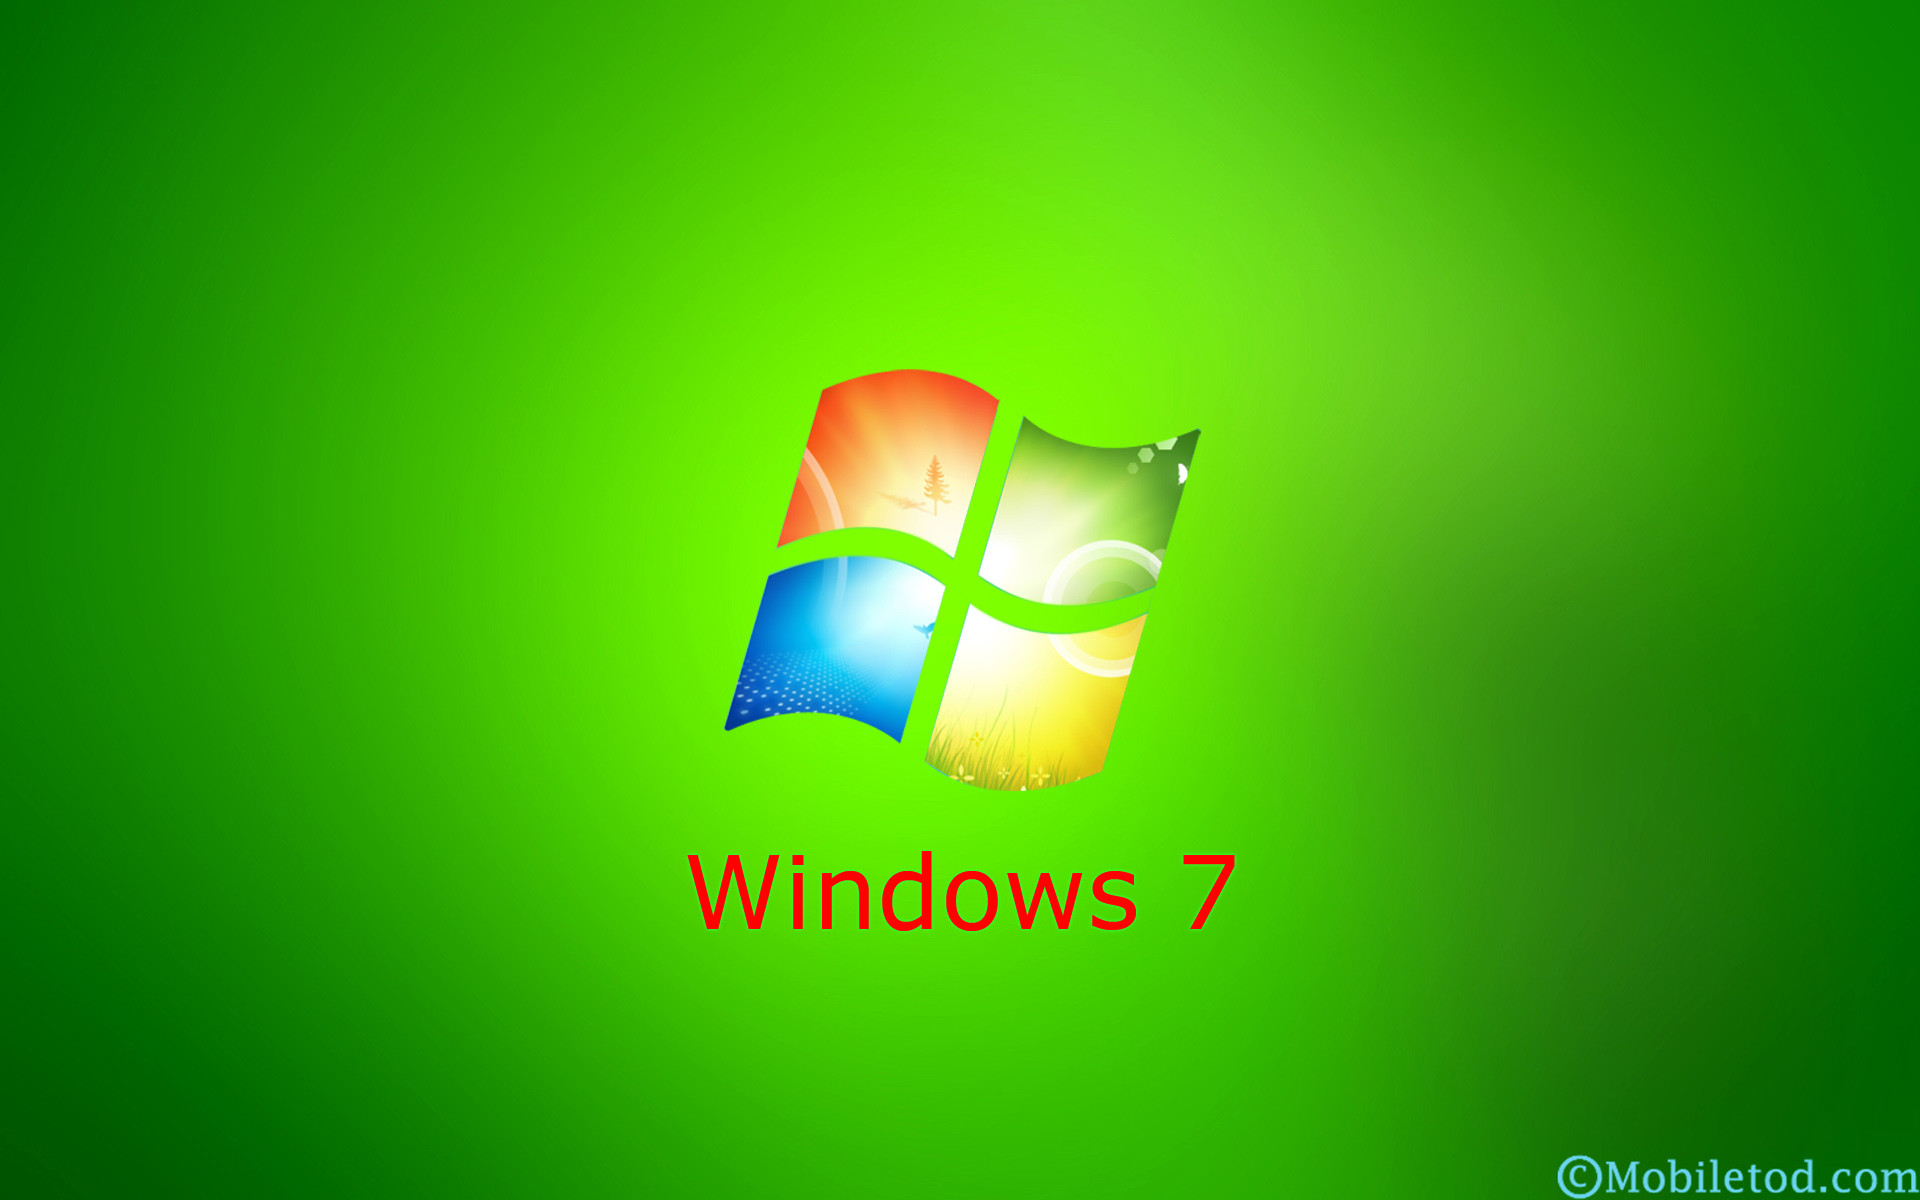 Windows 7 life. Виндовс. Заставка виндовс. Виндовс 7. Заставка Windows 7.